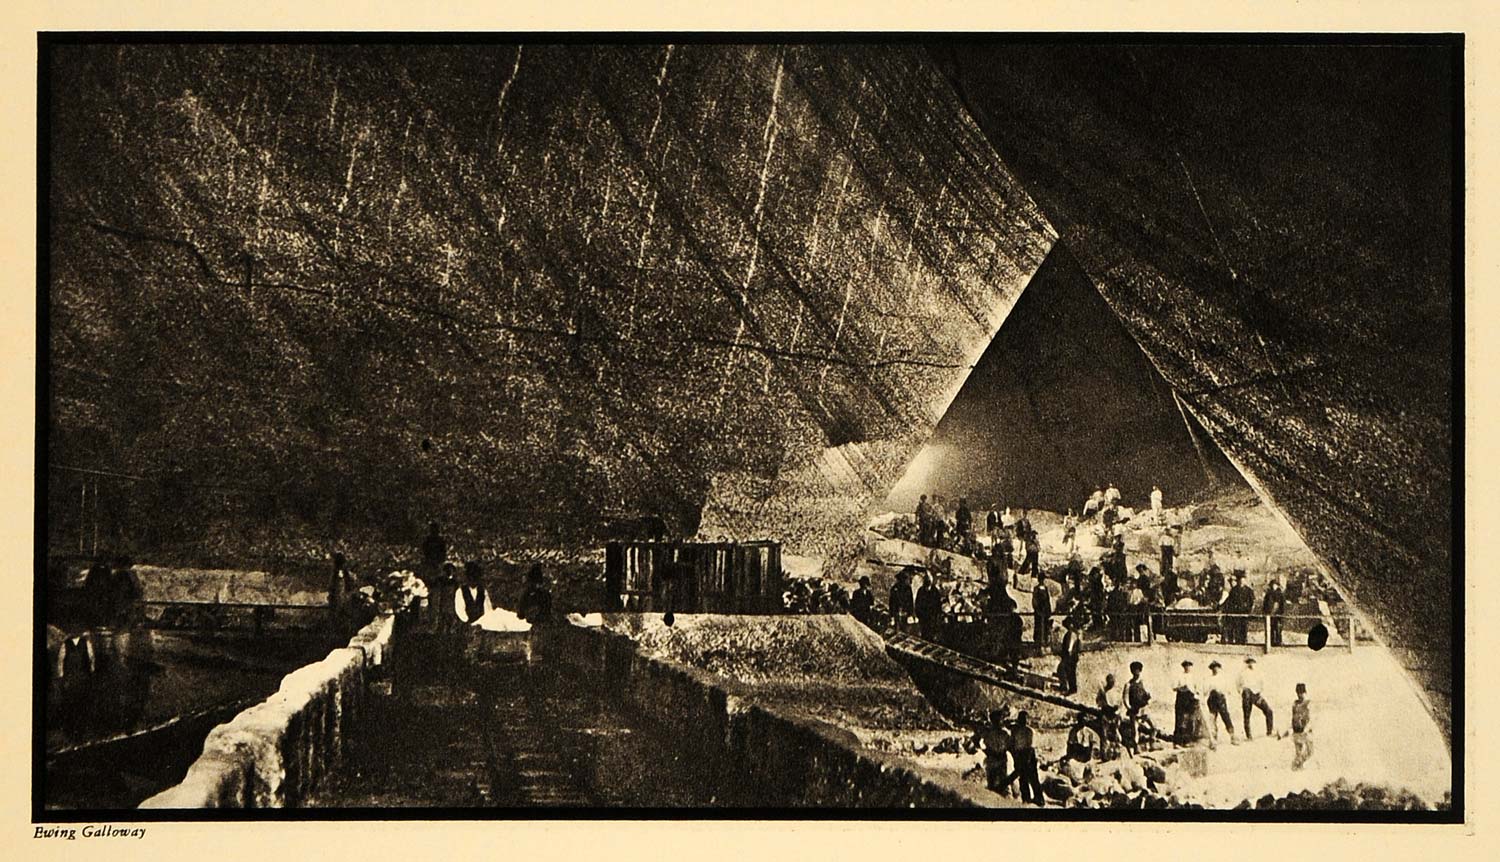 1930 Print Salt Mining Ewing Galloway Photography - ORIGINAL HISTORIC IMAGE FTZ1